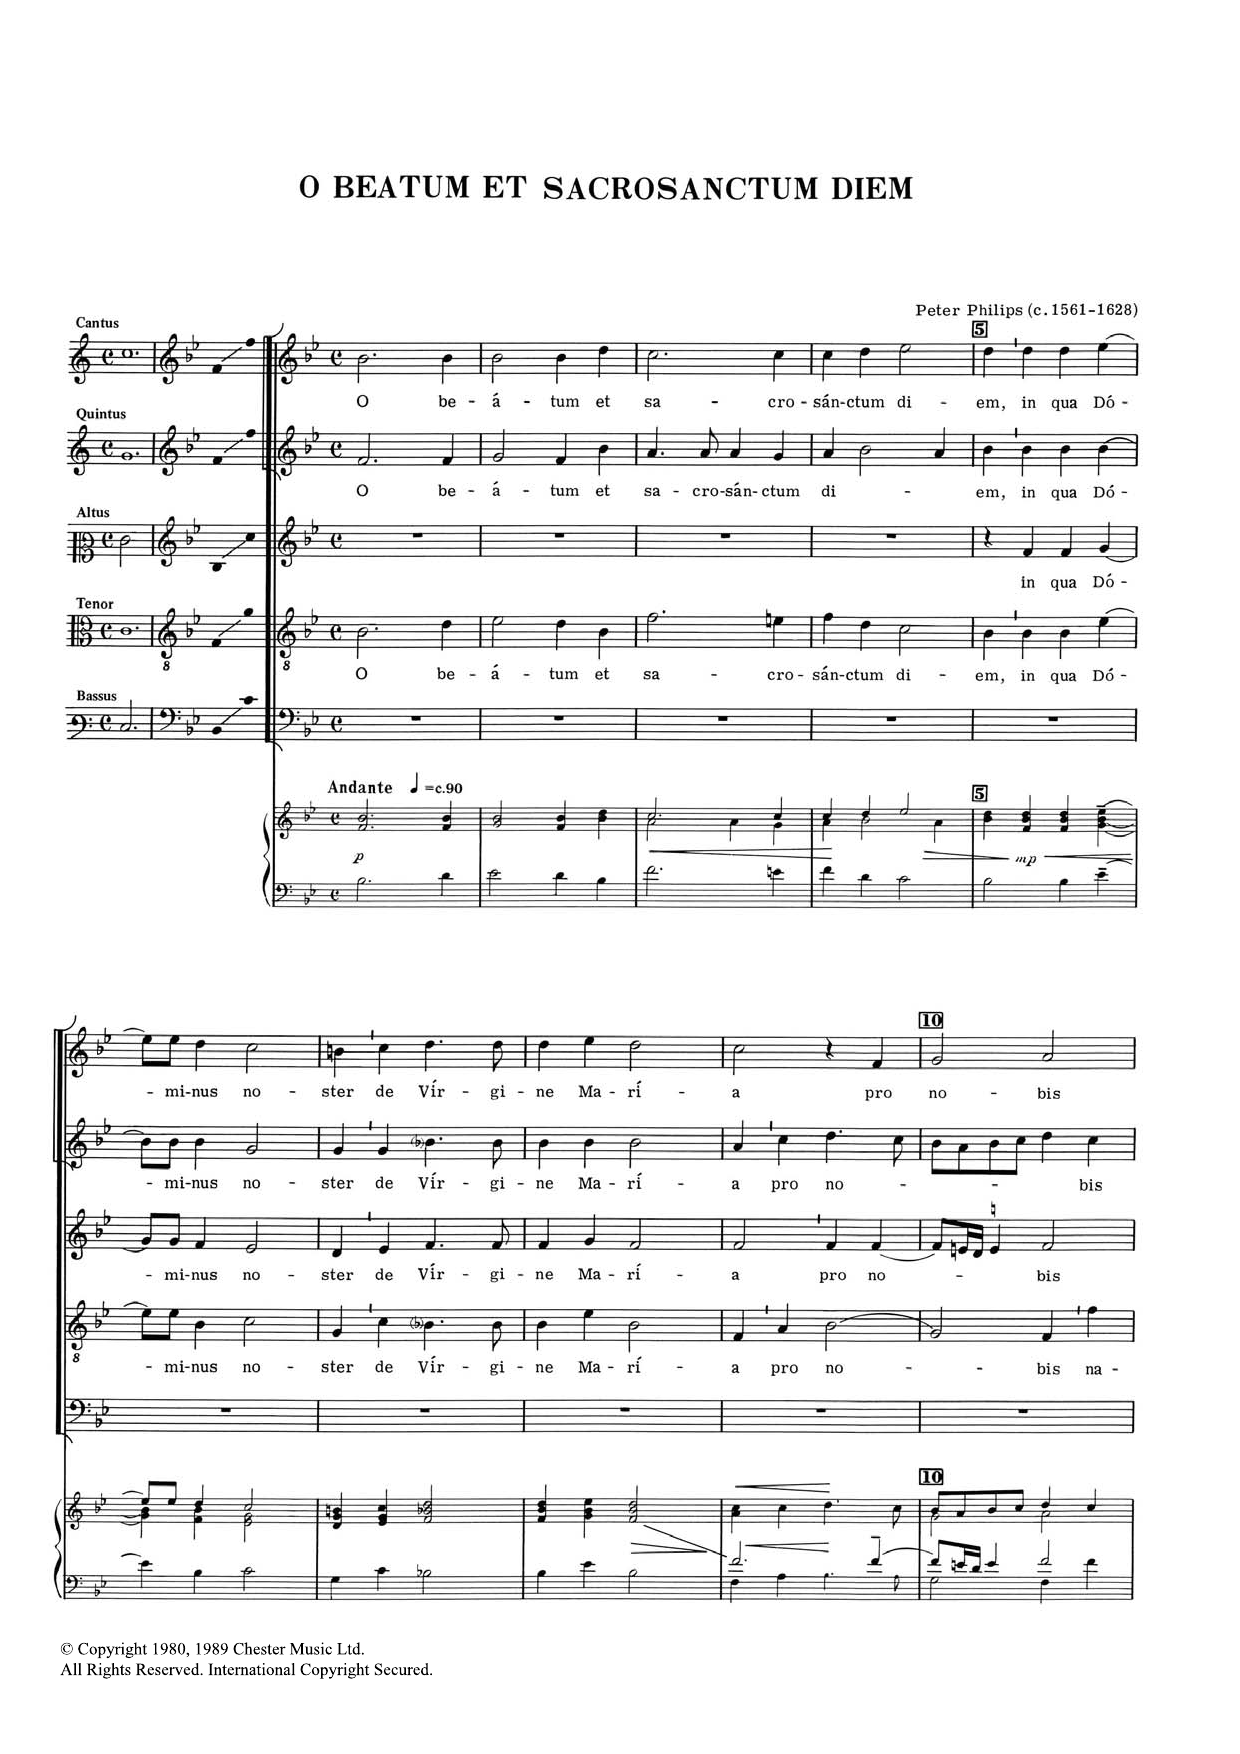 Peter Philips O Beatum Et Sacrosanctum Diem Sheet Music Notes & Chords for Choral SAATB - Download or Print PDF